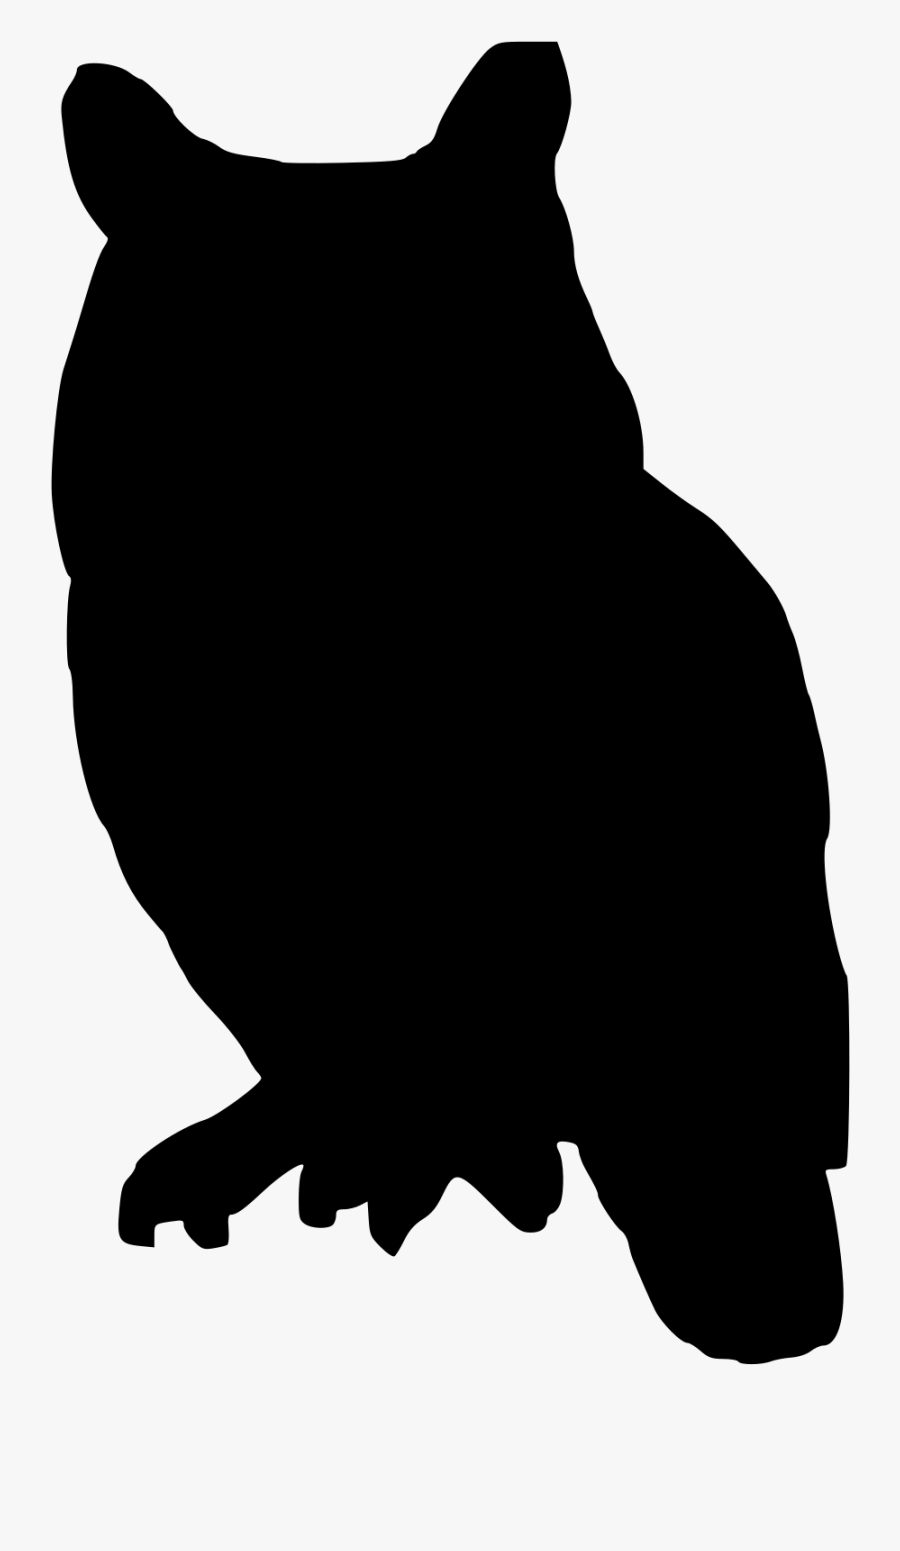 Owl Silhouette Clip Art - Silhouette Of Owl Clip Art, Transparent Clipart